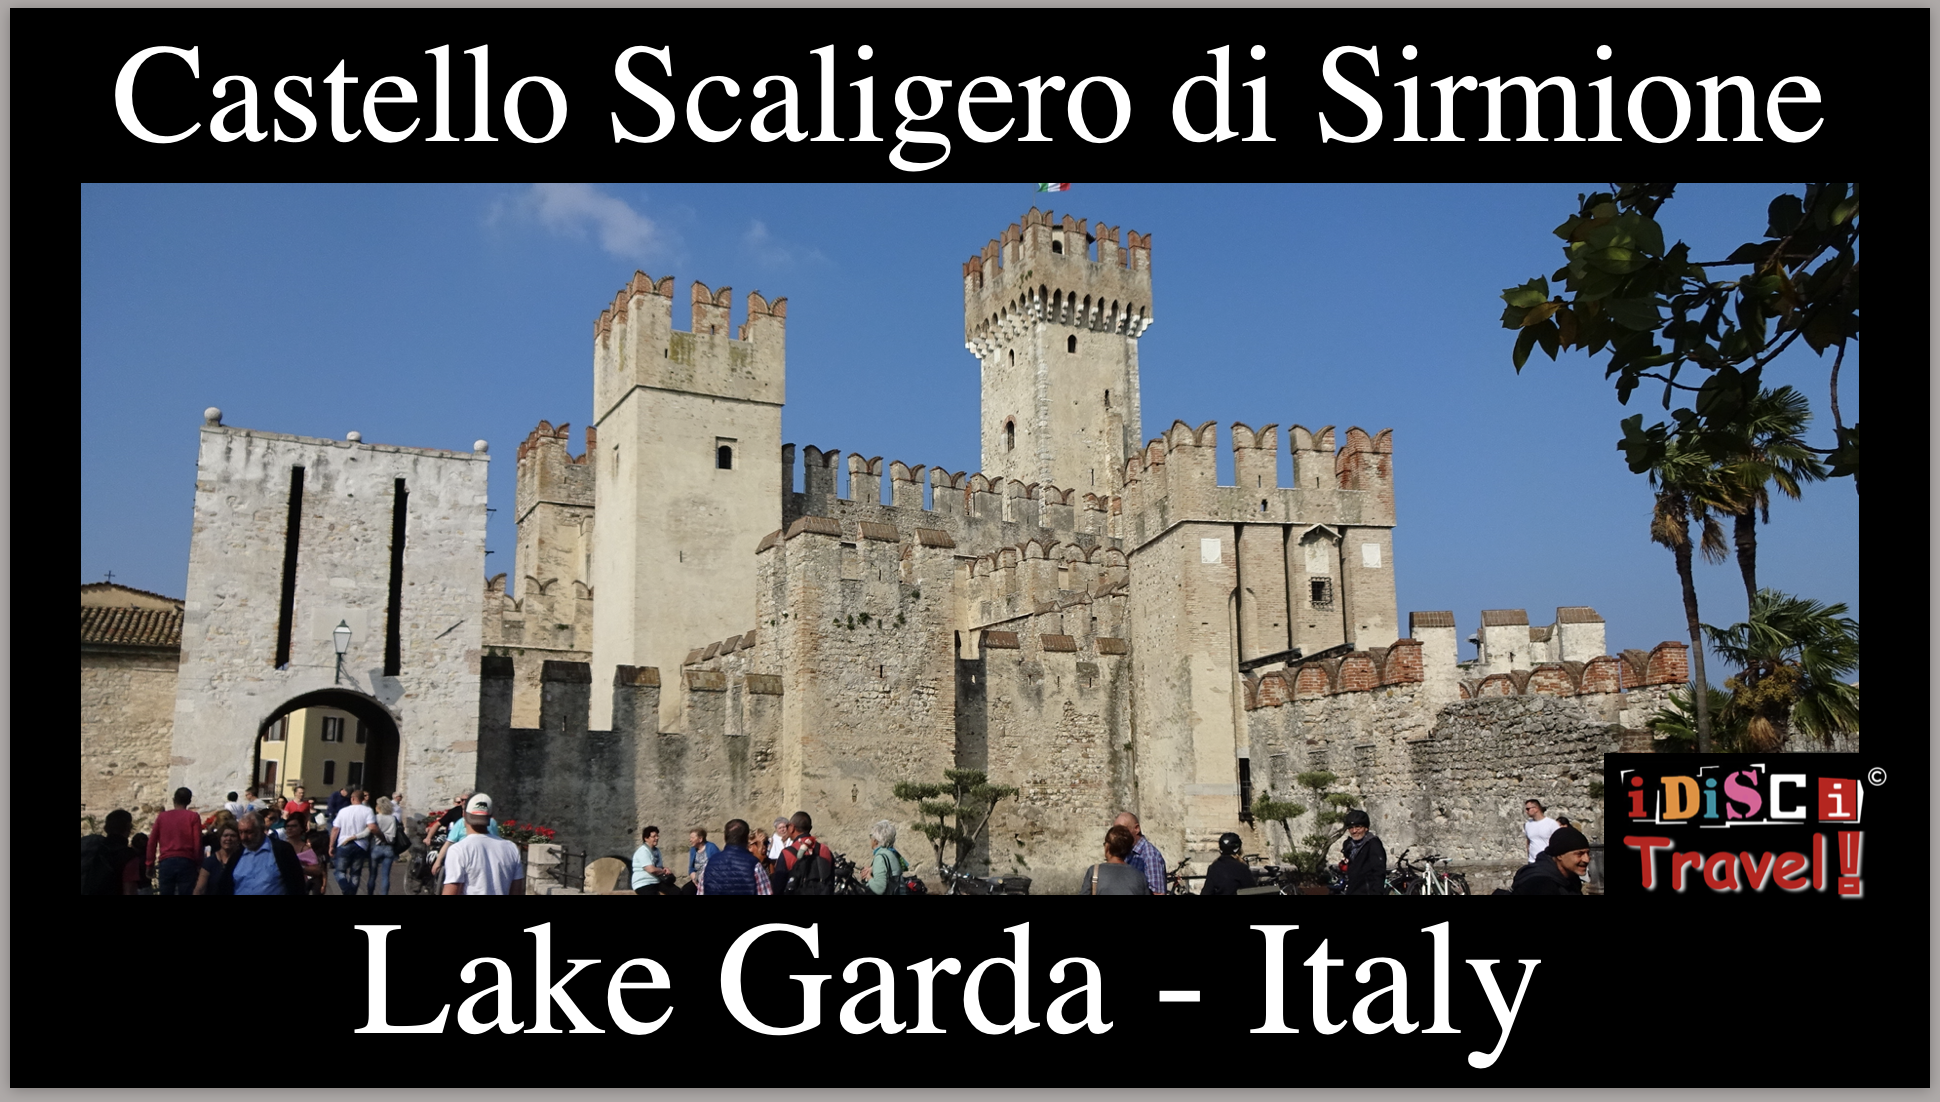 ITALY - Sirmione - CastelloScaligero di Sirmione, LakeGarda (Lago di Garda)